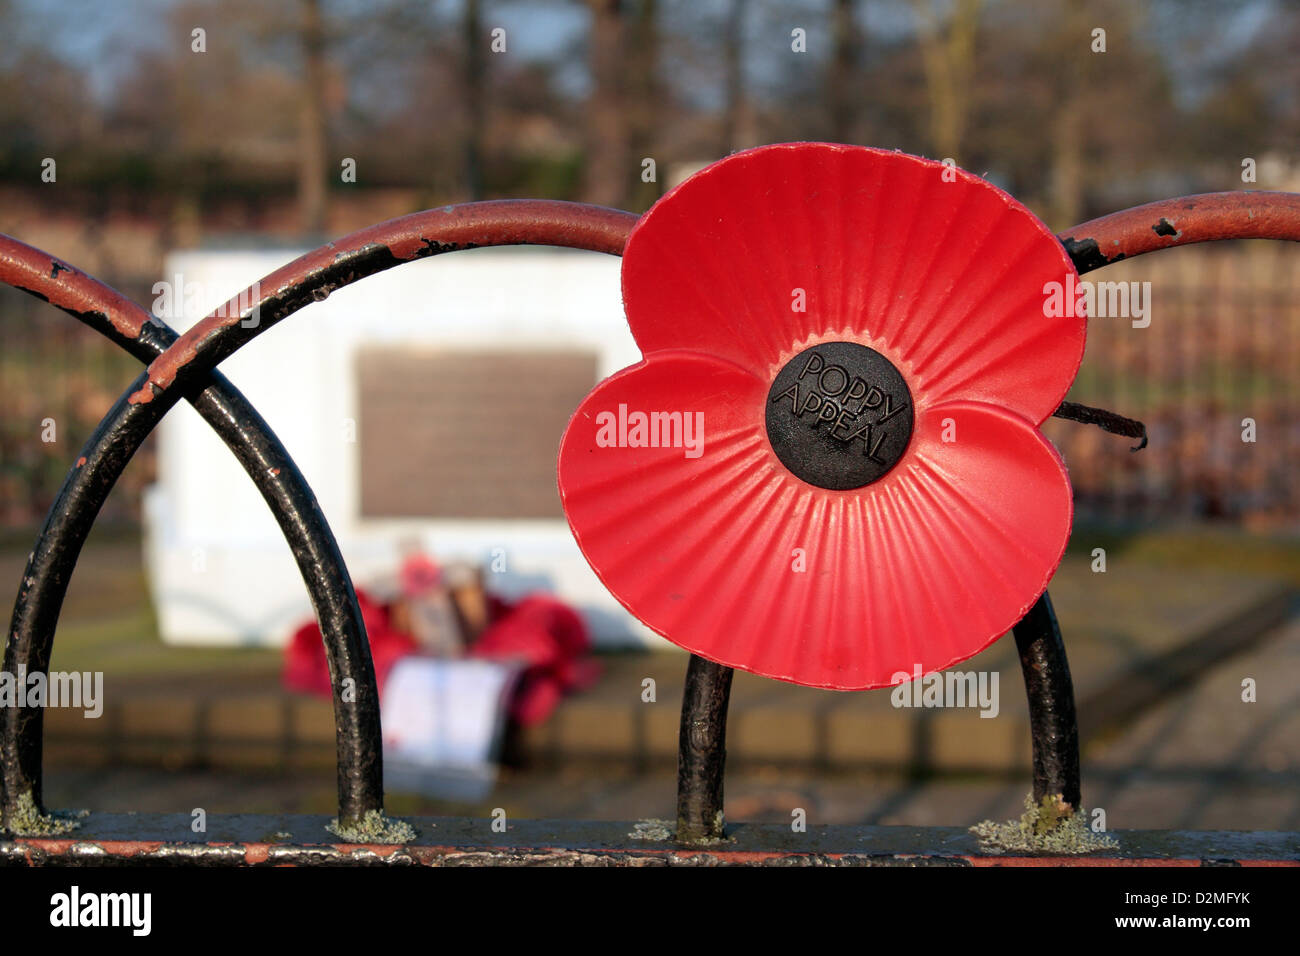 Eine große Mohnblume auf dem United States Army Air Forces WWII Denkmal in Bushy Park, West-London, UK. Stockfoto